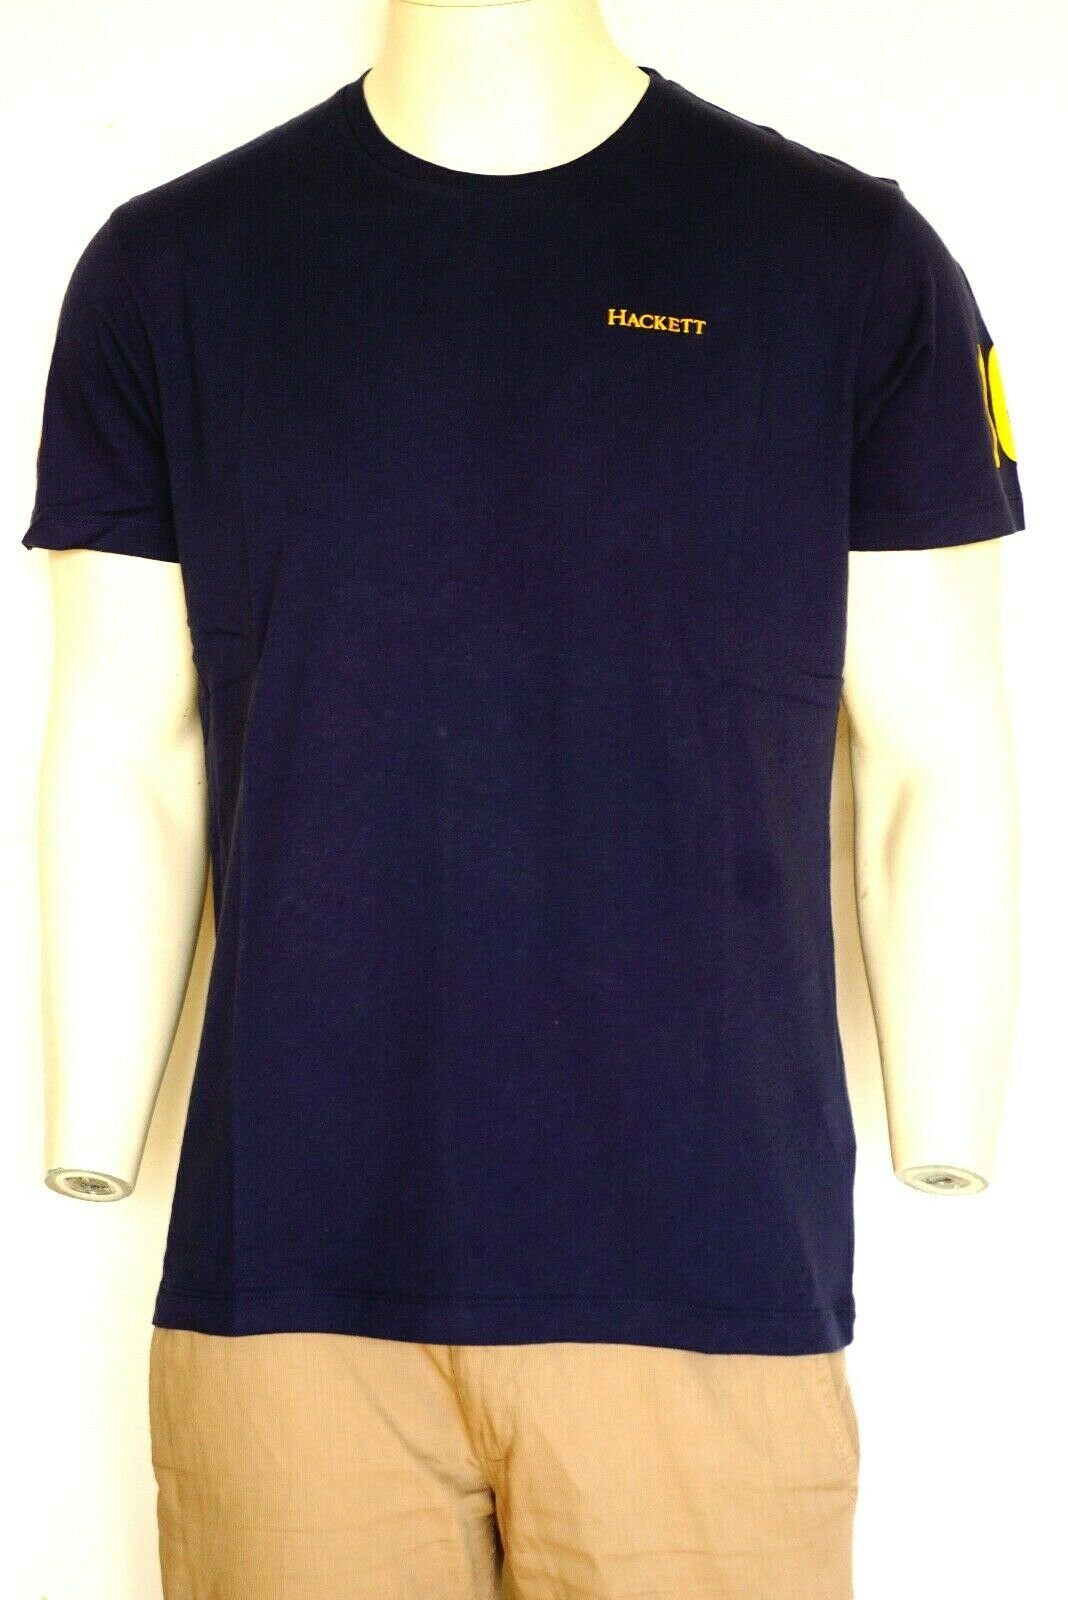 Blau Herren Hacket Cup World T-shirts Hackett Spain Hackett T-Shirt Herren T-Shirt,